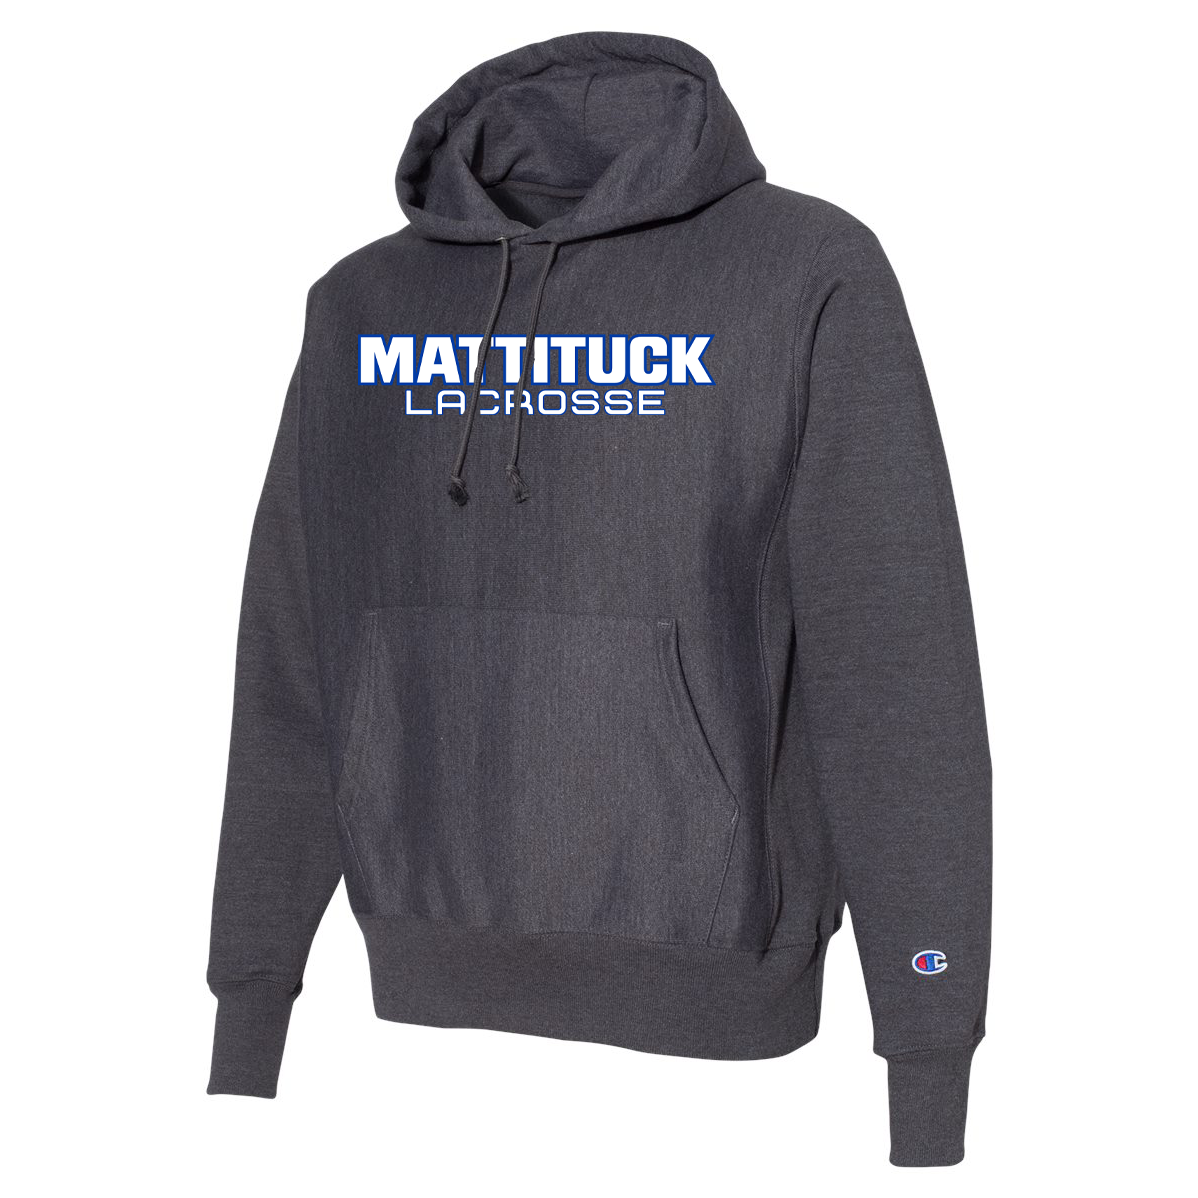 Mattituck Lacrosse Champion Sweatshirt